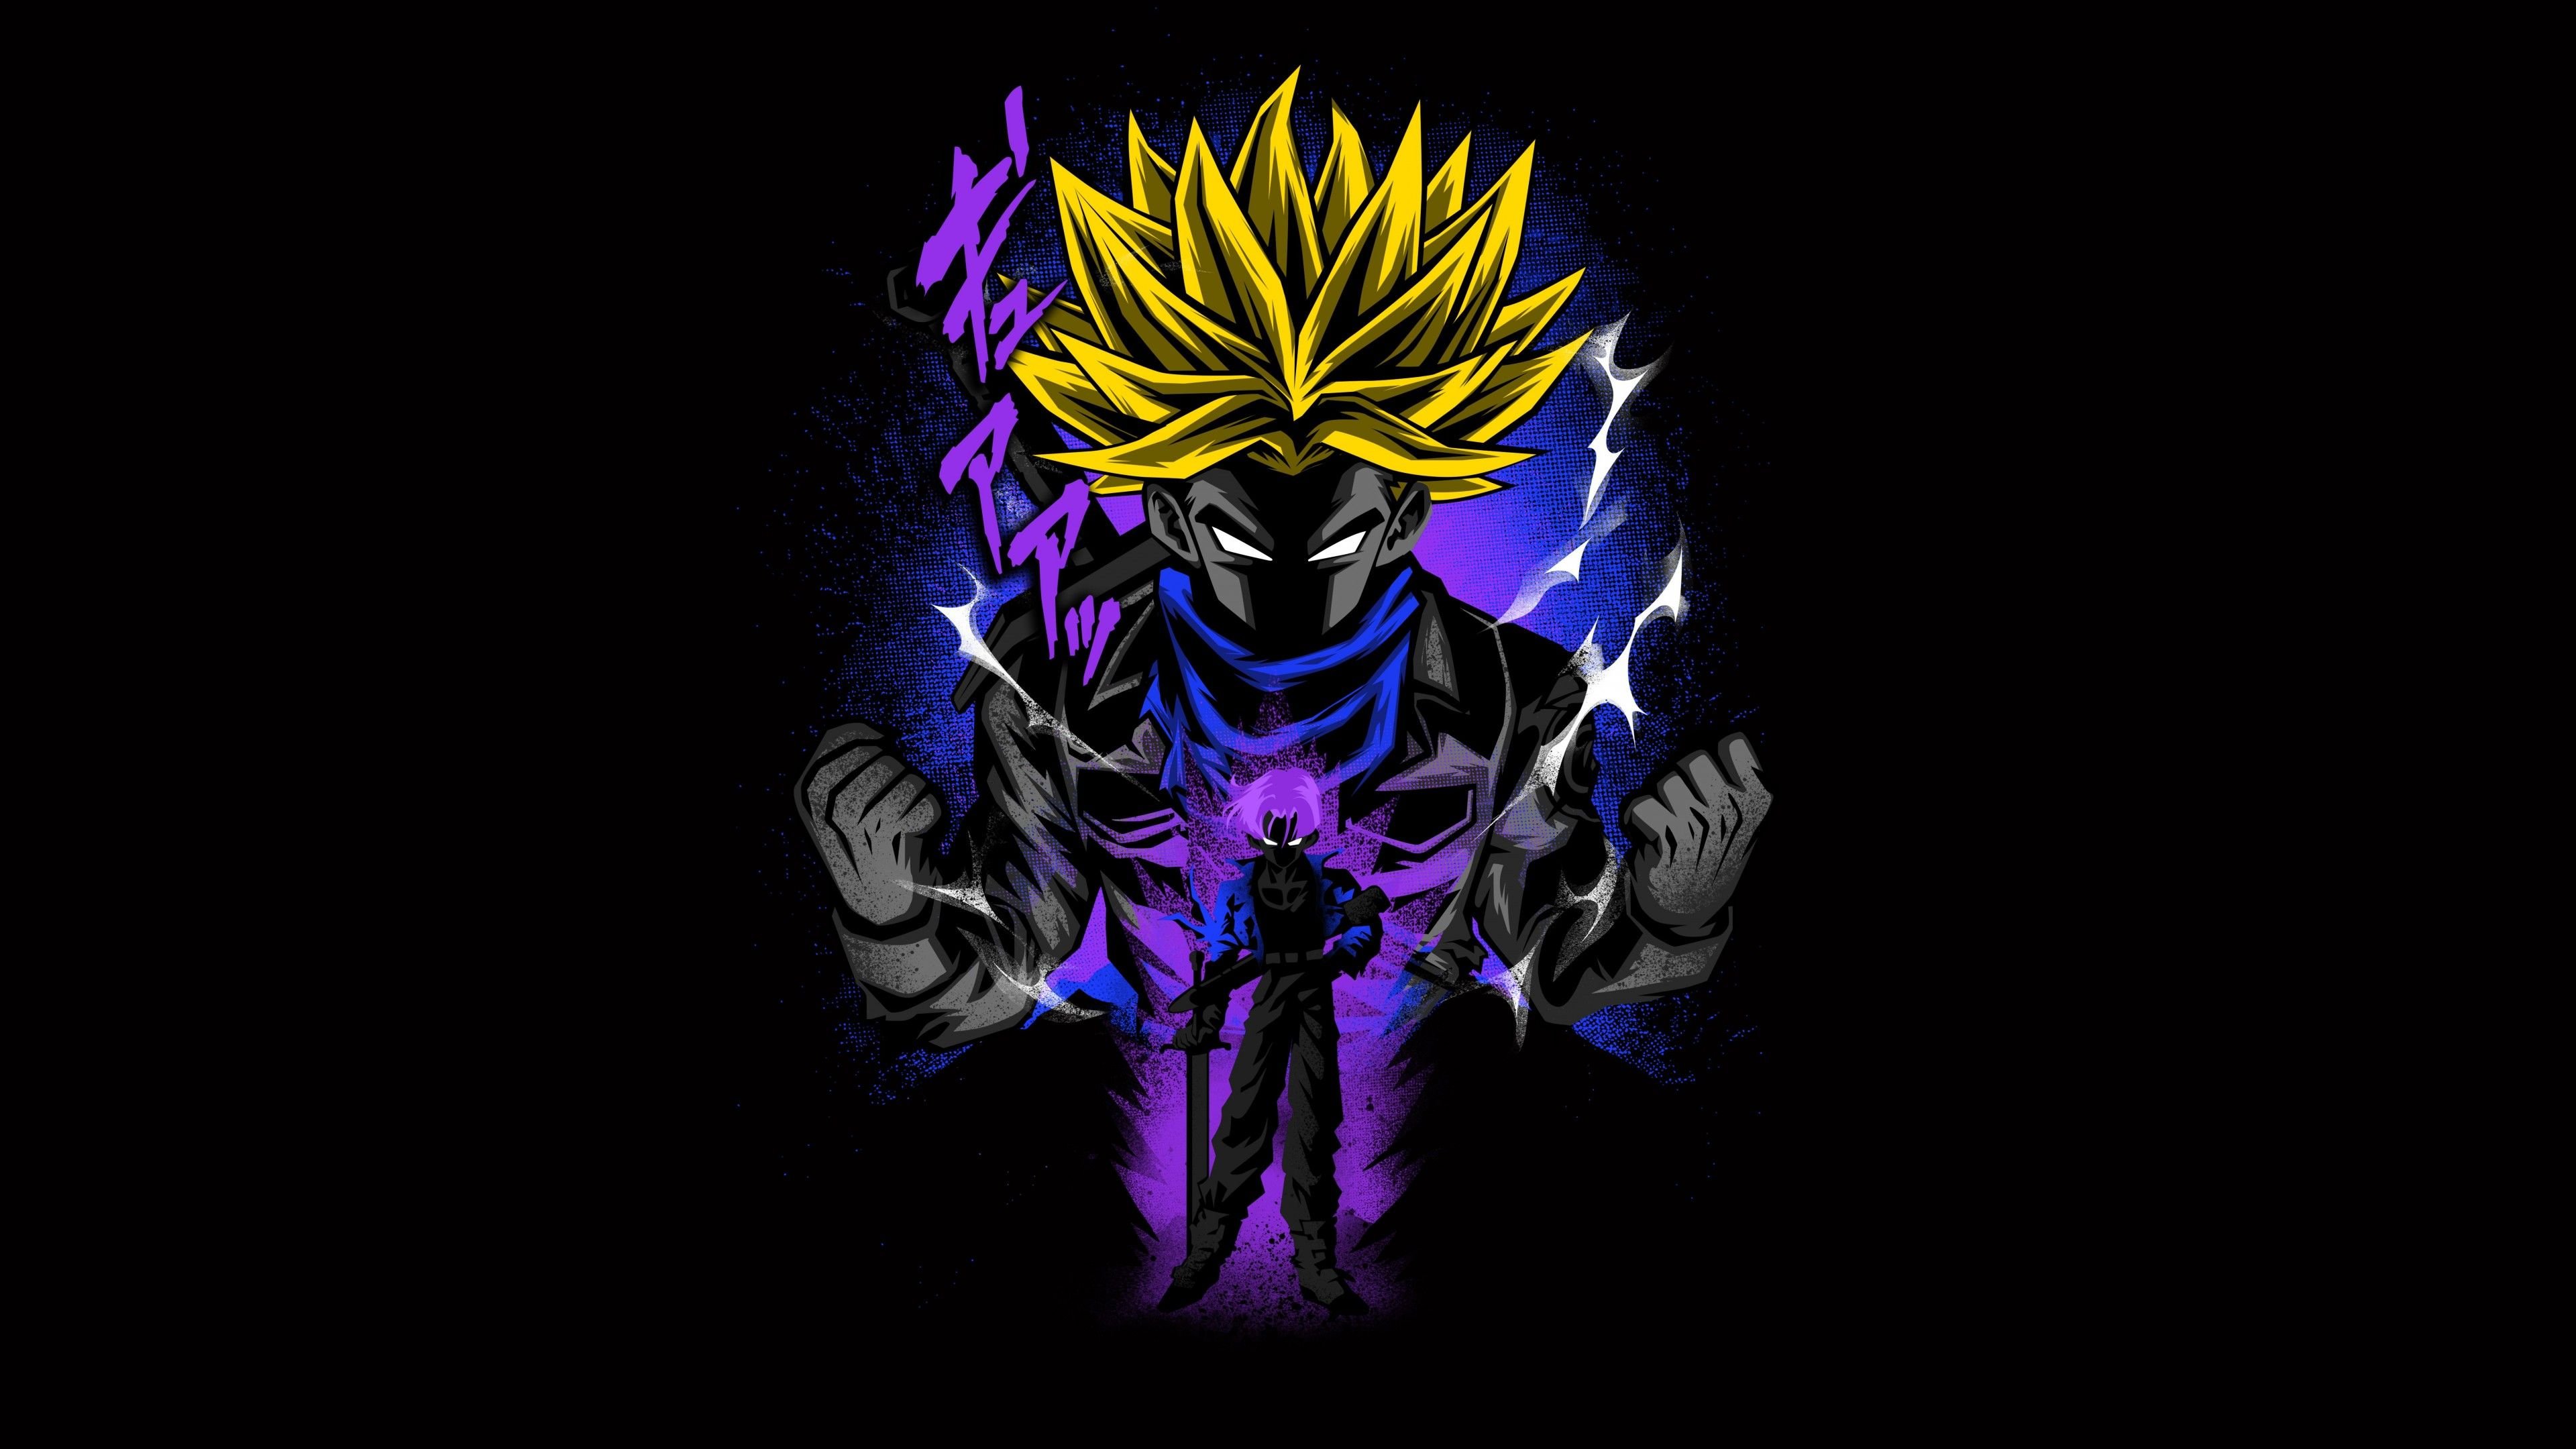 Son Goku Wallpaper 4K, Dragon Ball Z, Anime series, Black background, Black/ Dark